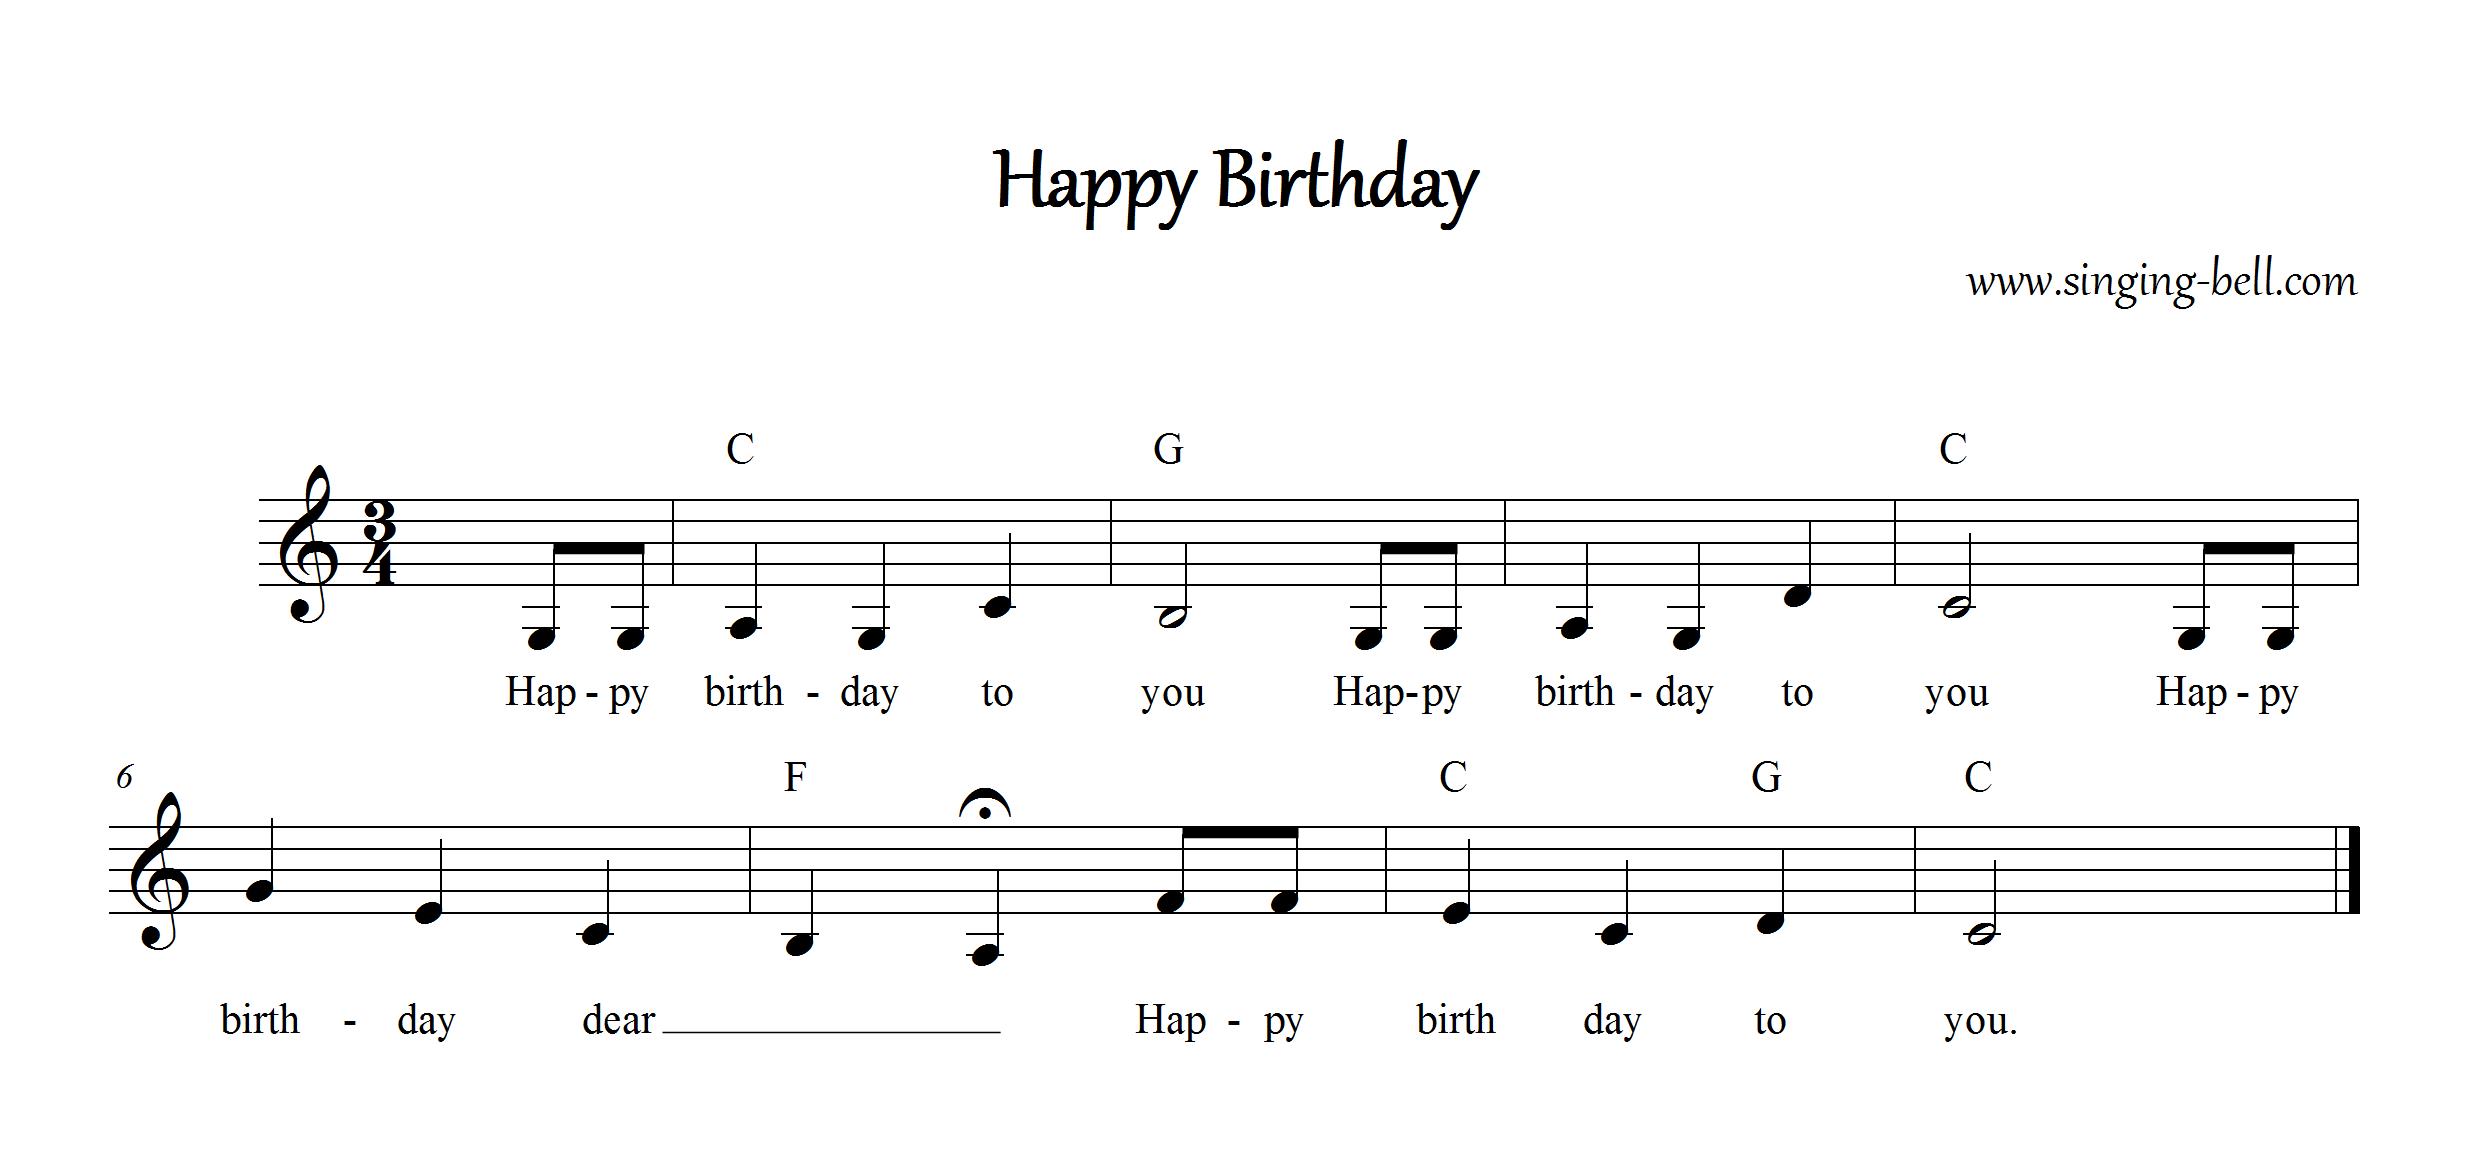 Happy Birthday To You Notes For Piano подборка фото, распечатай себе ...